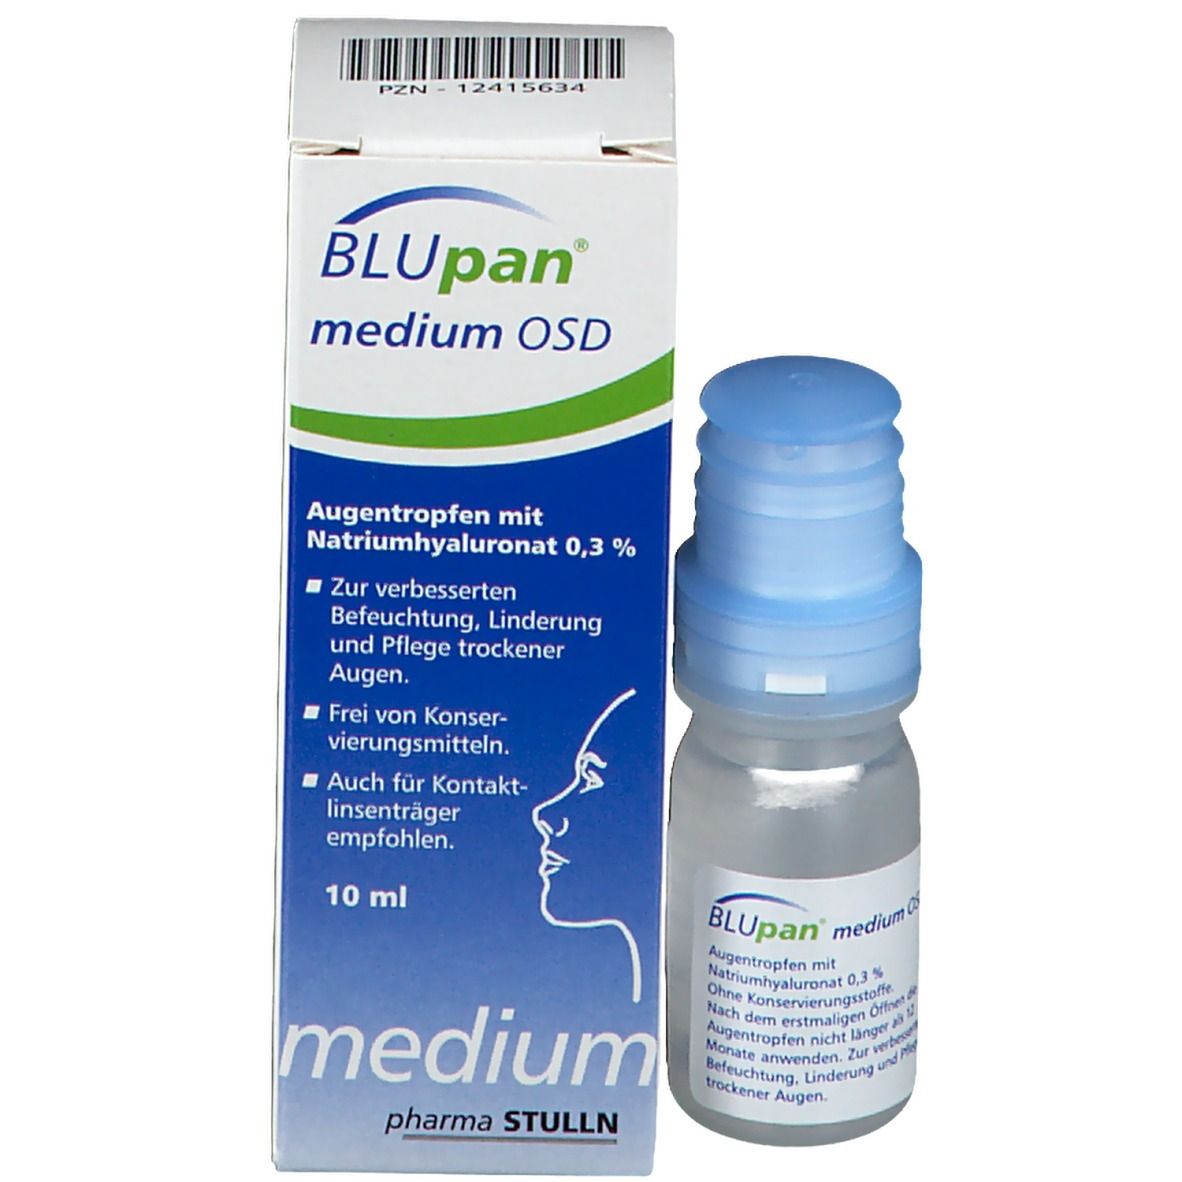 BLUpan® medium OSD